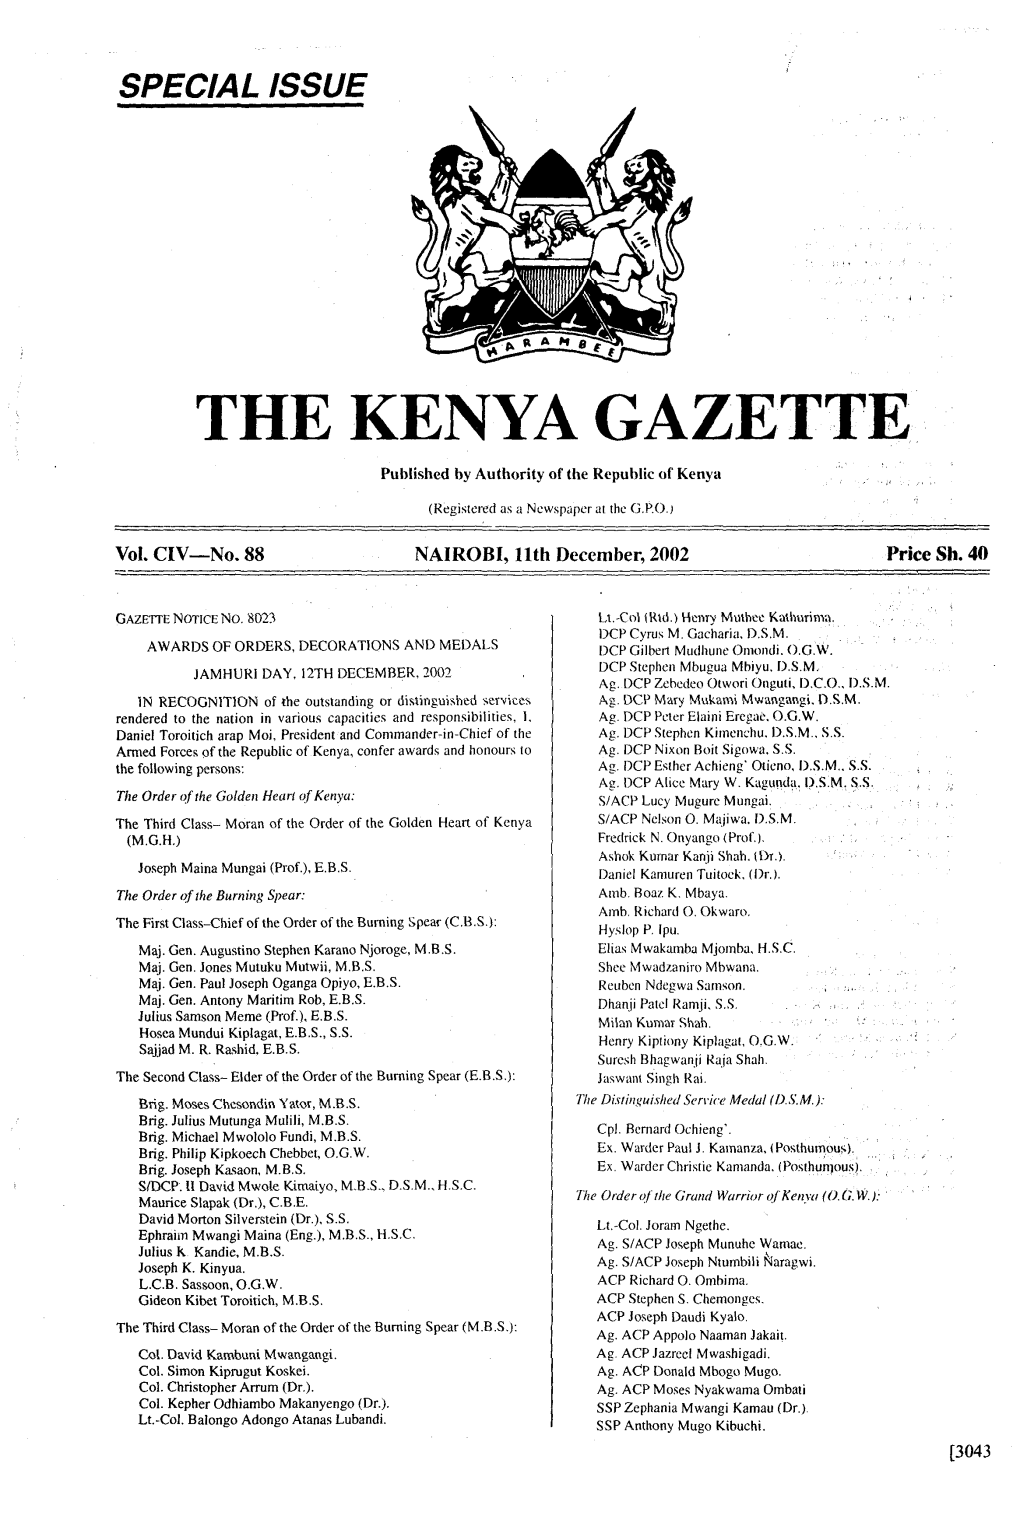 The Kenya Gazett